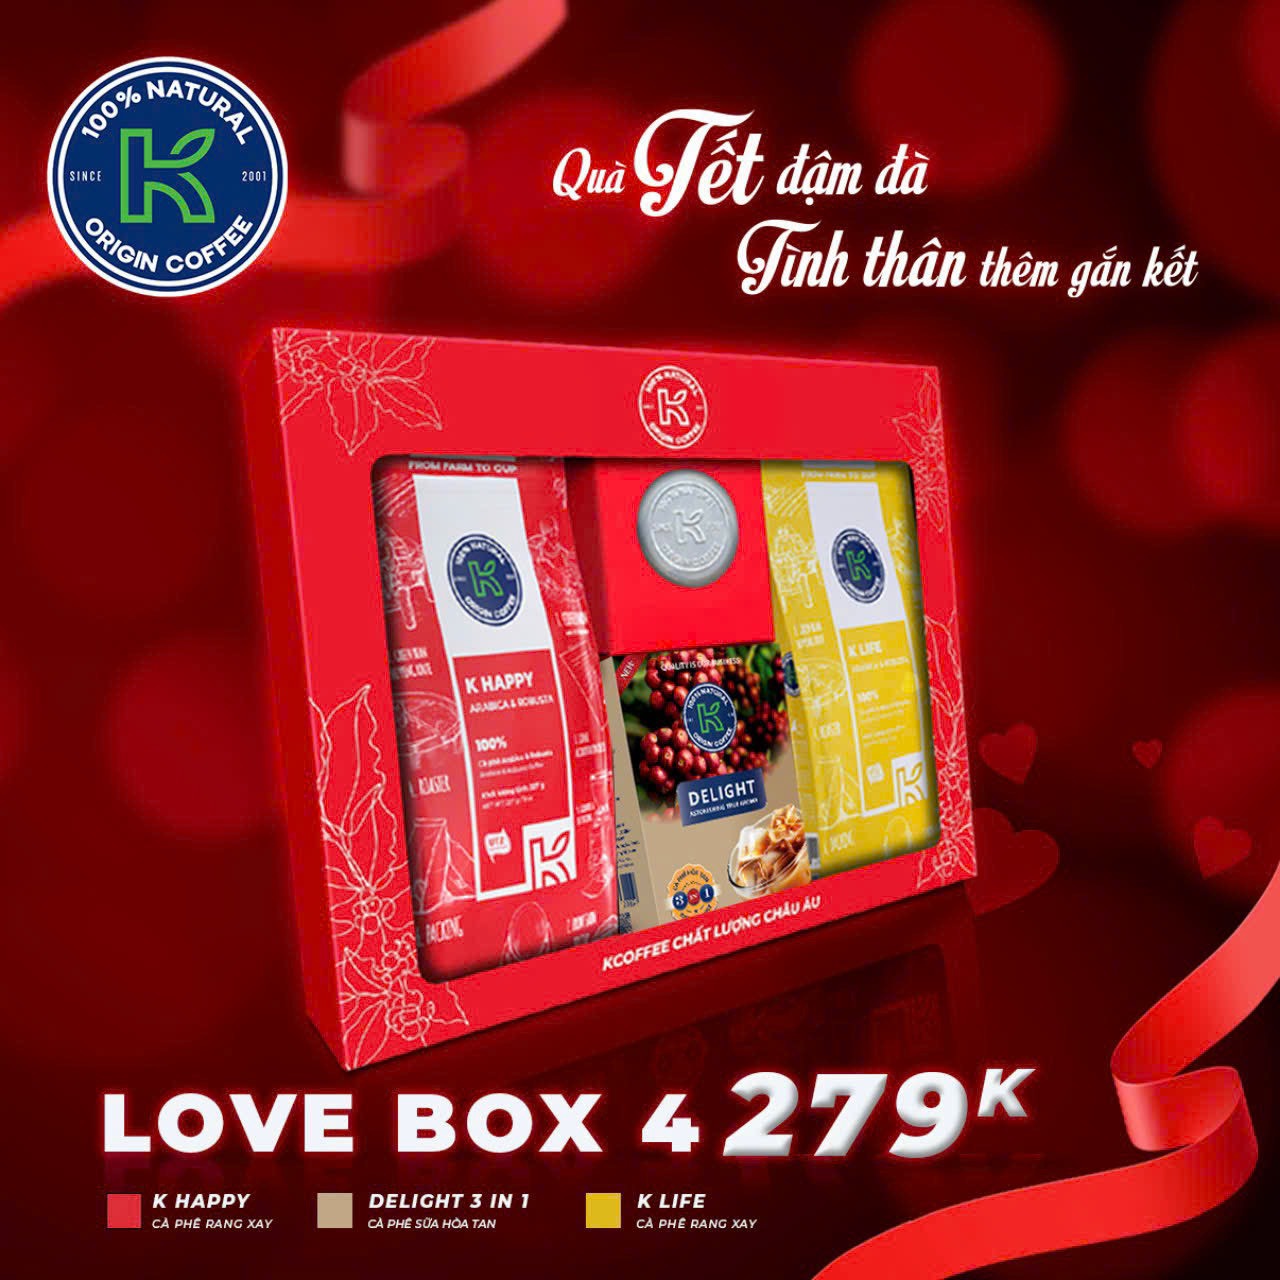 GIFTSET LOVE BOX 4